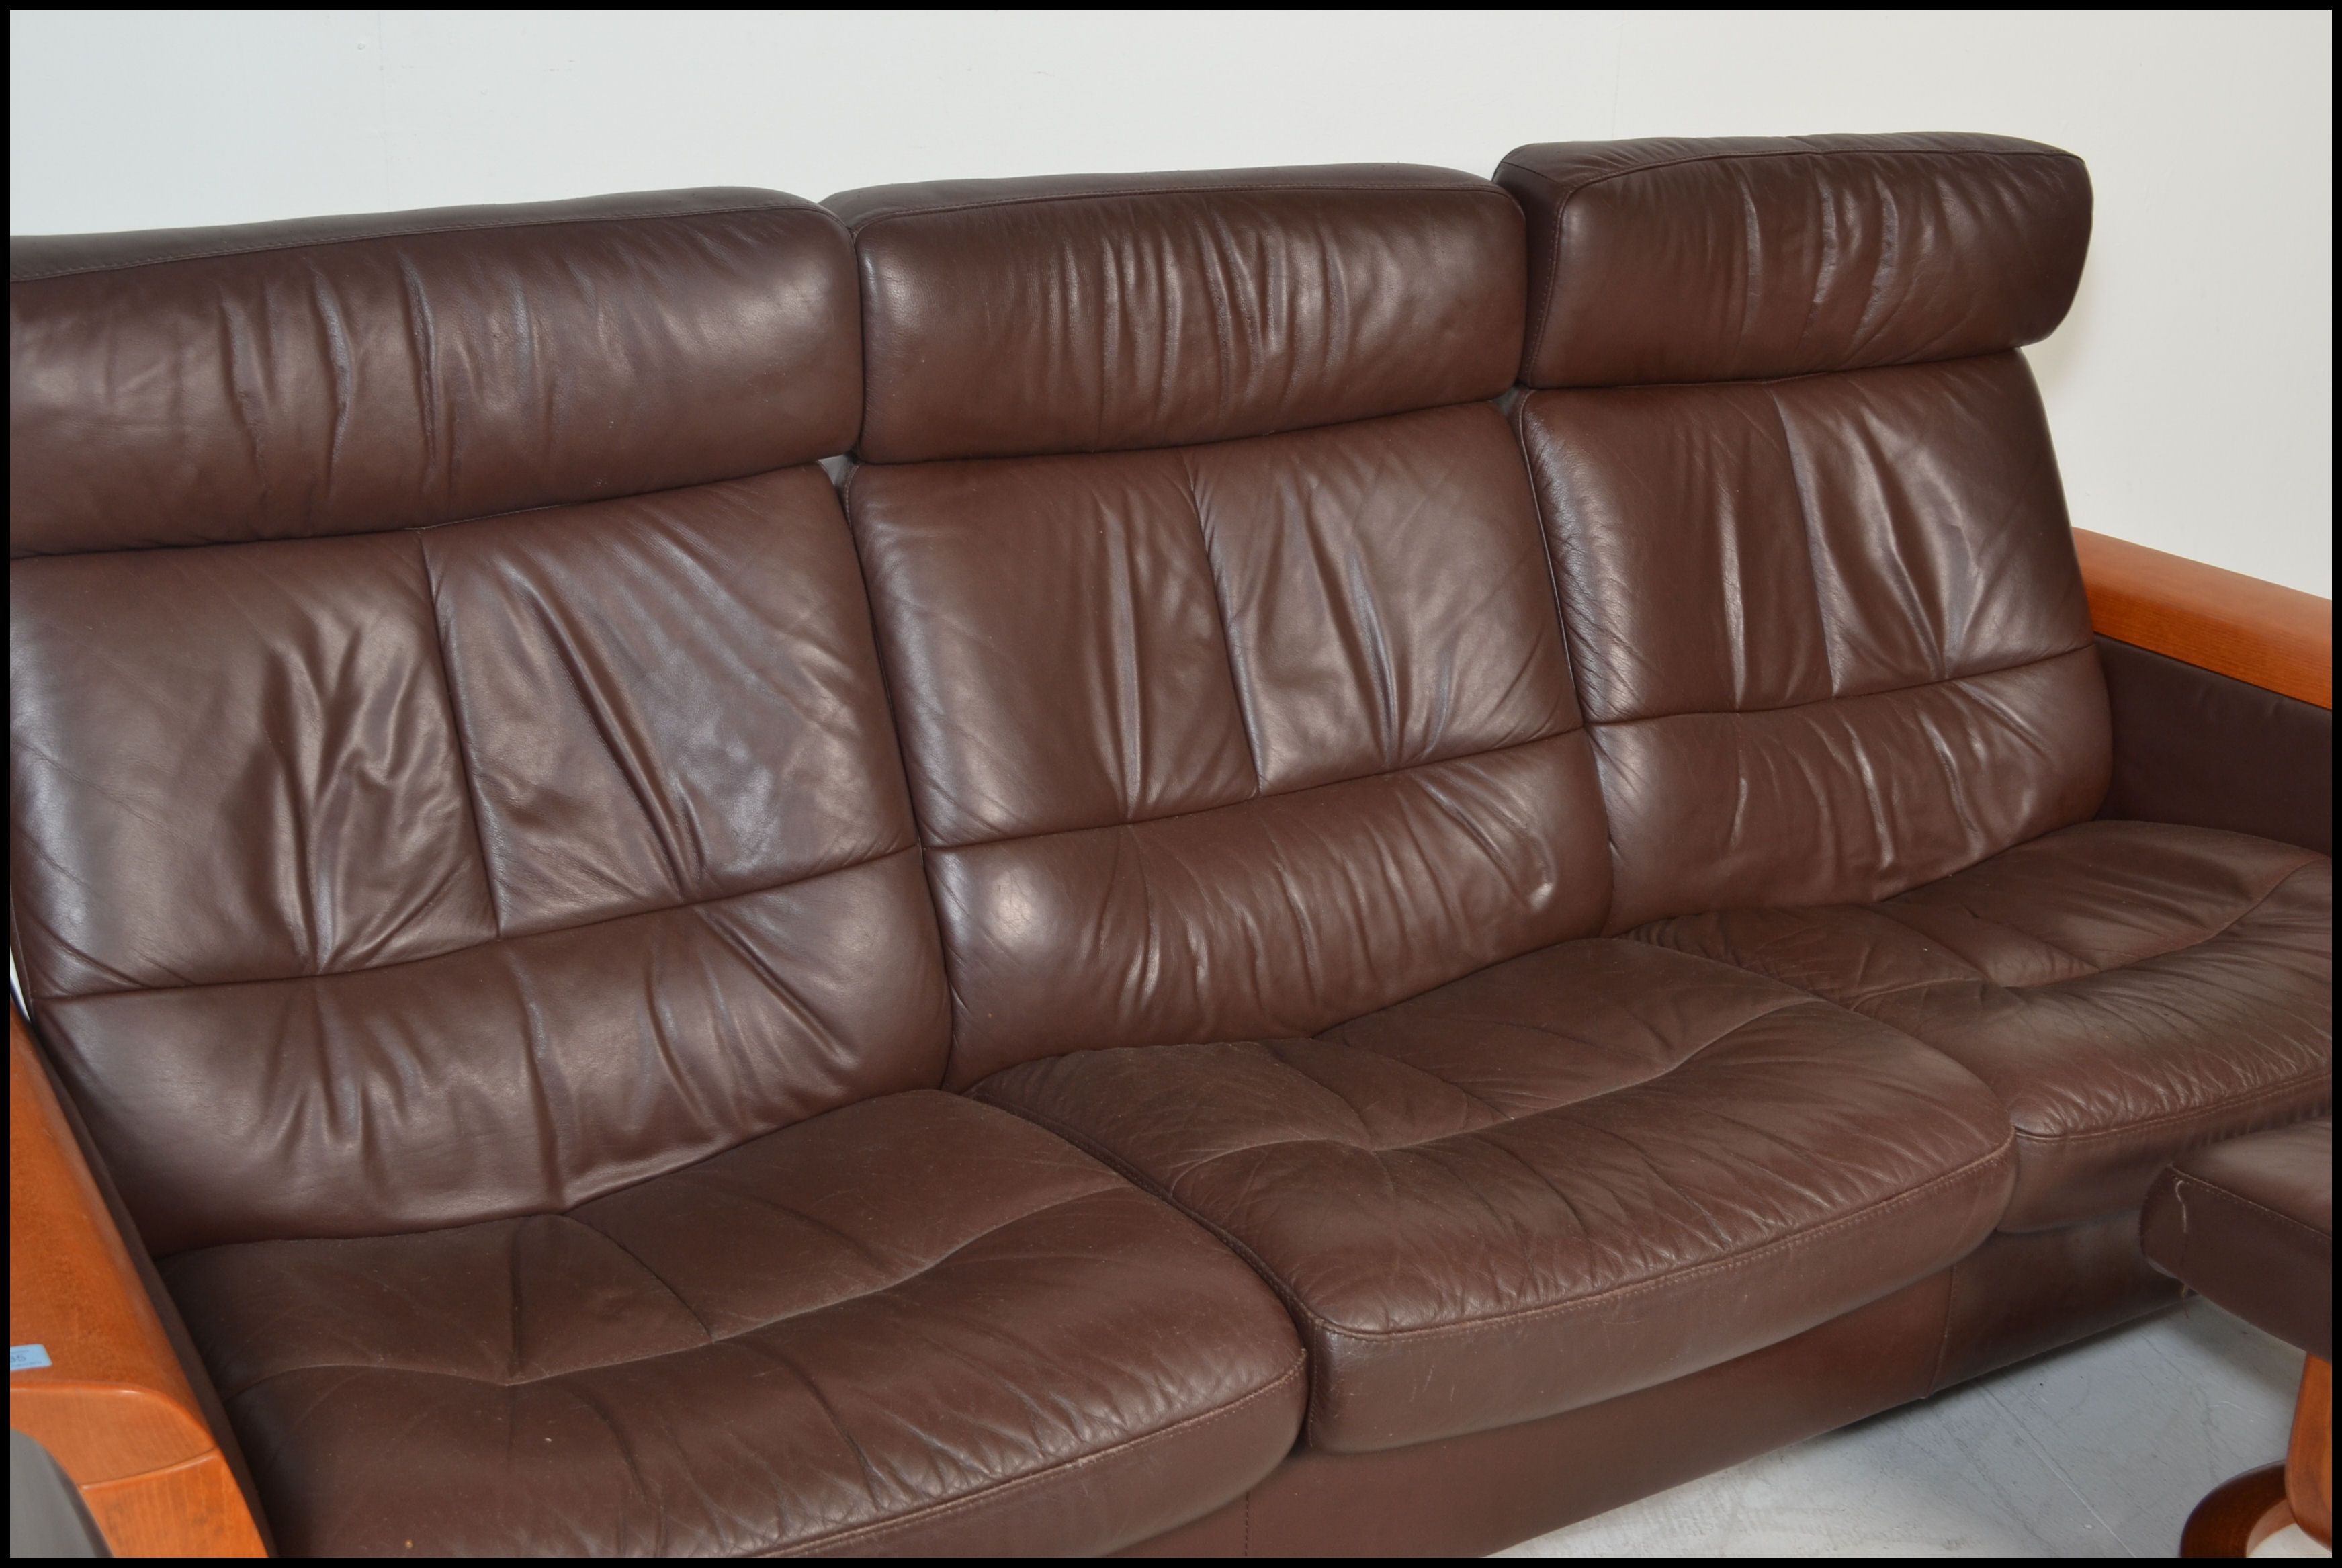 An Ekornes Stressless three seater brown leather Reclining Sofa of Scandinavian design, having - Image 5 of 6